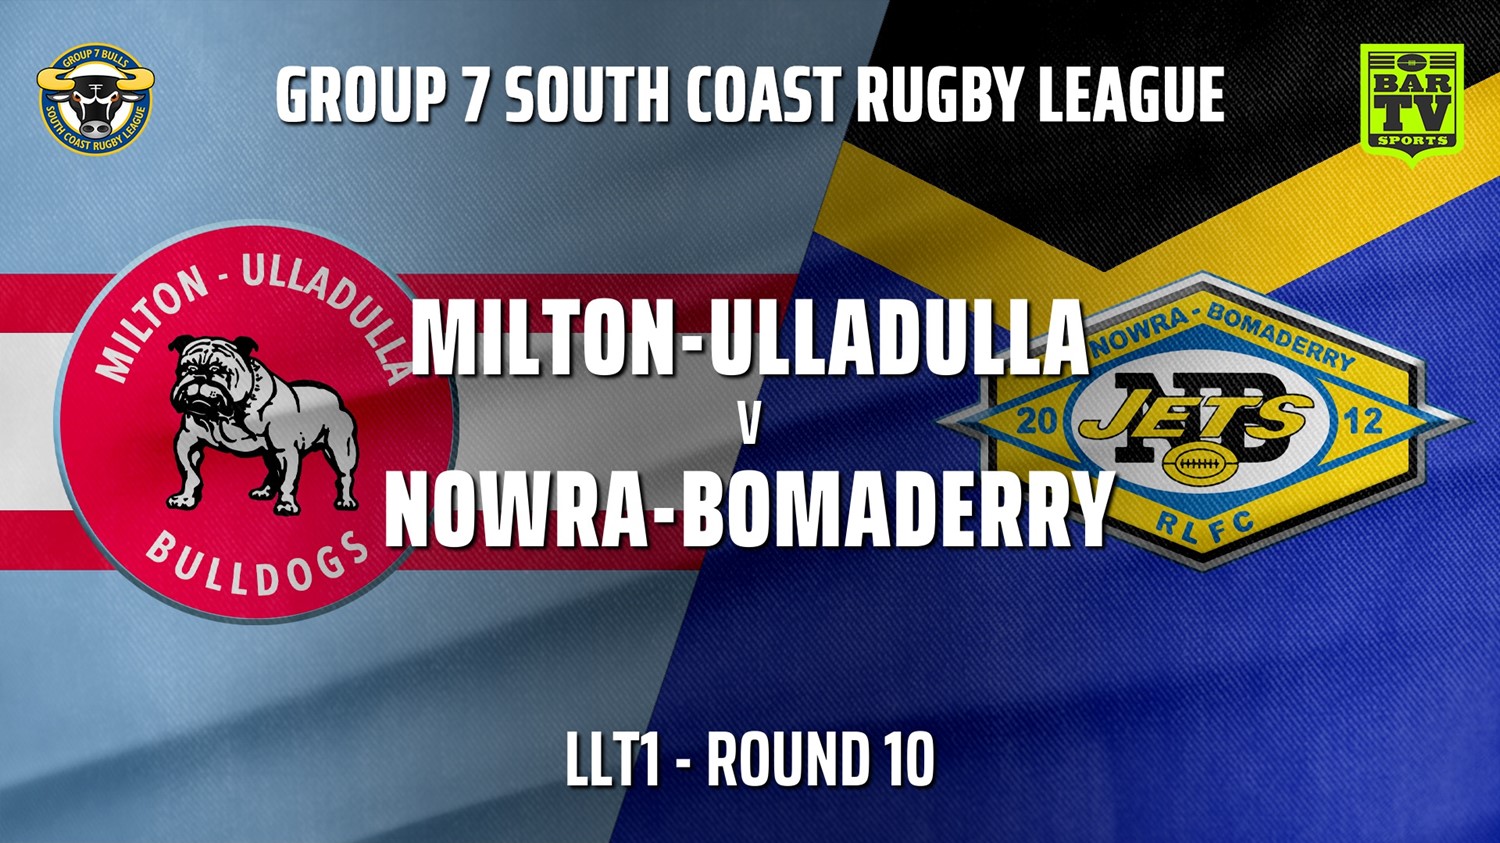 210620-South Coast Round 10 - LLT1 - Milton-Ulladulla Bulldogs v Nowra-Bomaderry  Slate Image